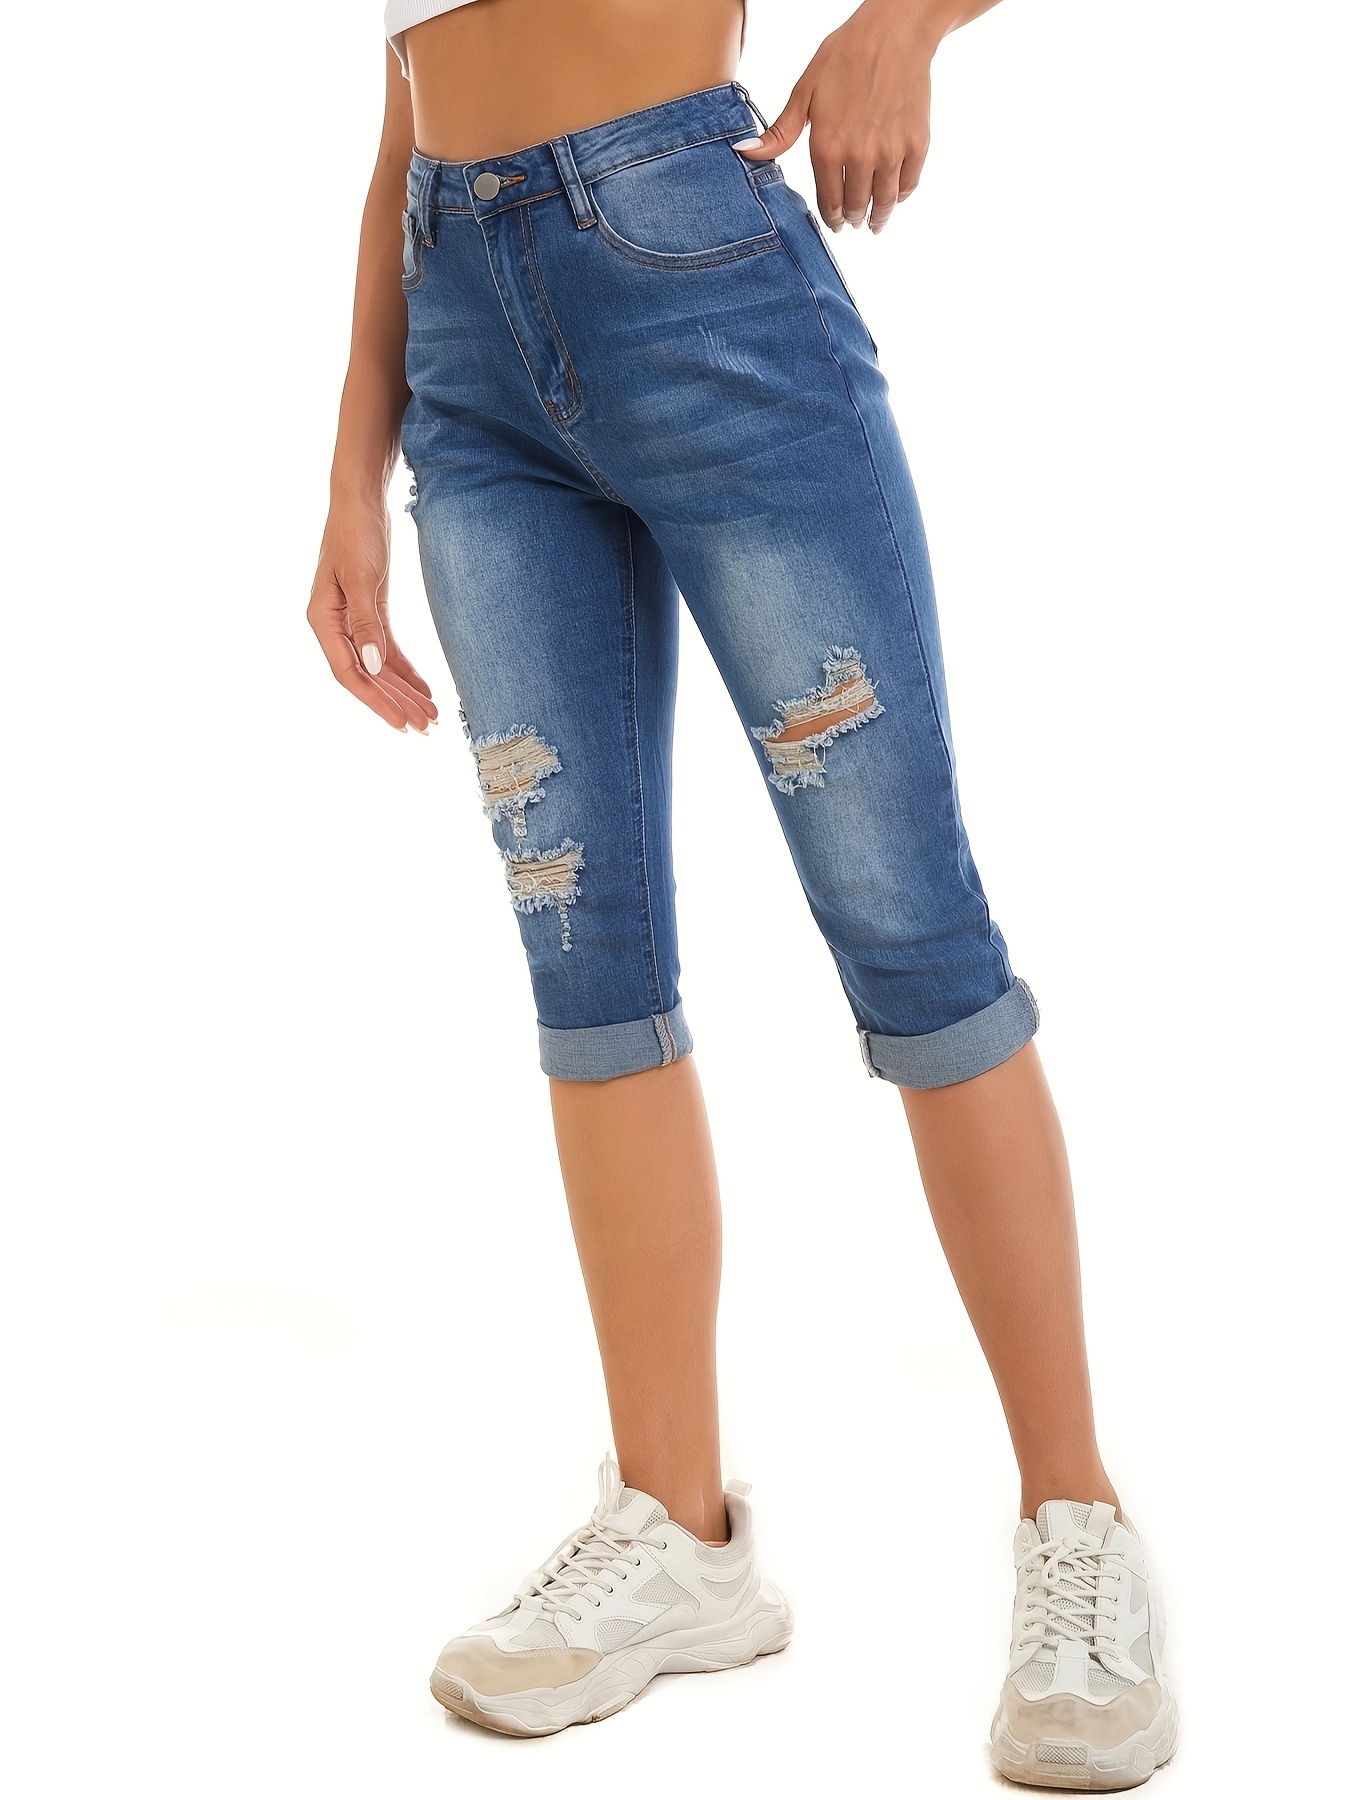 Blue Ripped Holes Capris Jeans, Slim Fit Mid-Stretch Cropped Denim Pants,  Women's Denim Jeans & Clothing